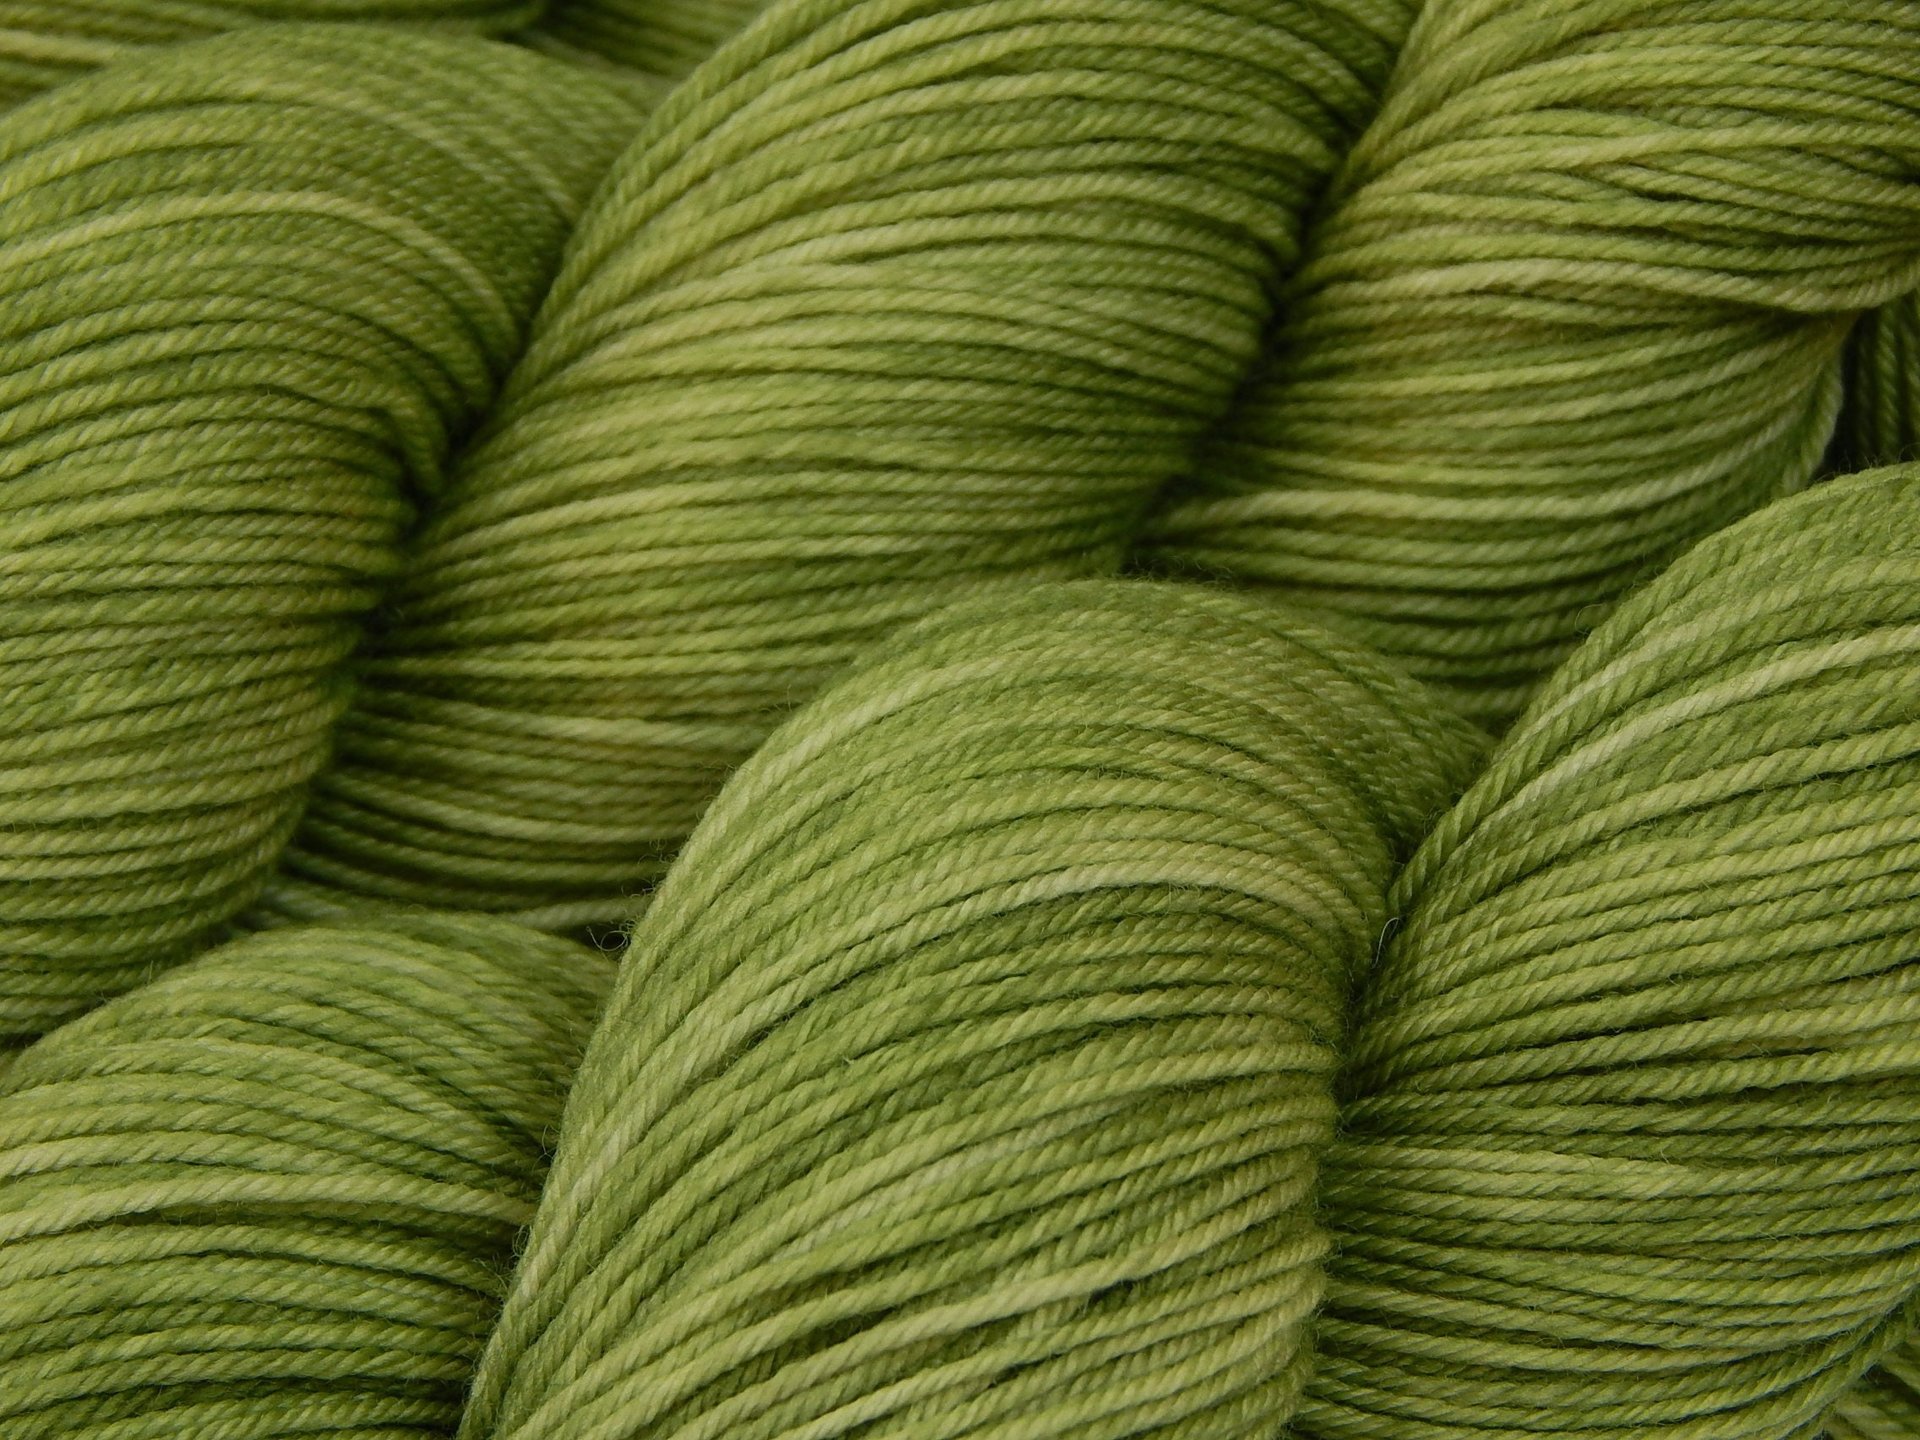 Hand Dyed Sock Yarn, Fingering Weight 4 Ply Superwash Merino Wool - Green Tea - Light Olive Knitting Yarn, Avocado Hand Dyed Yarn